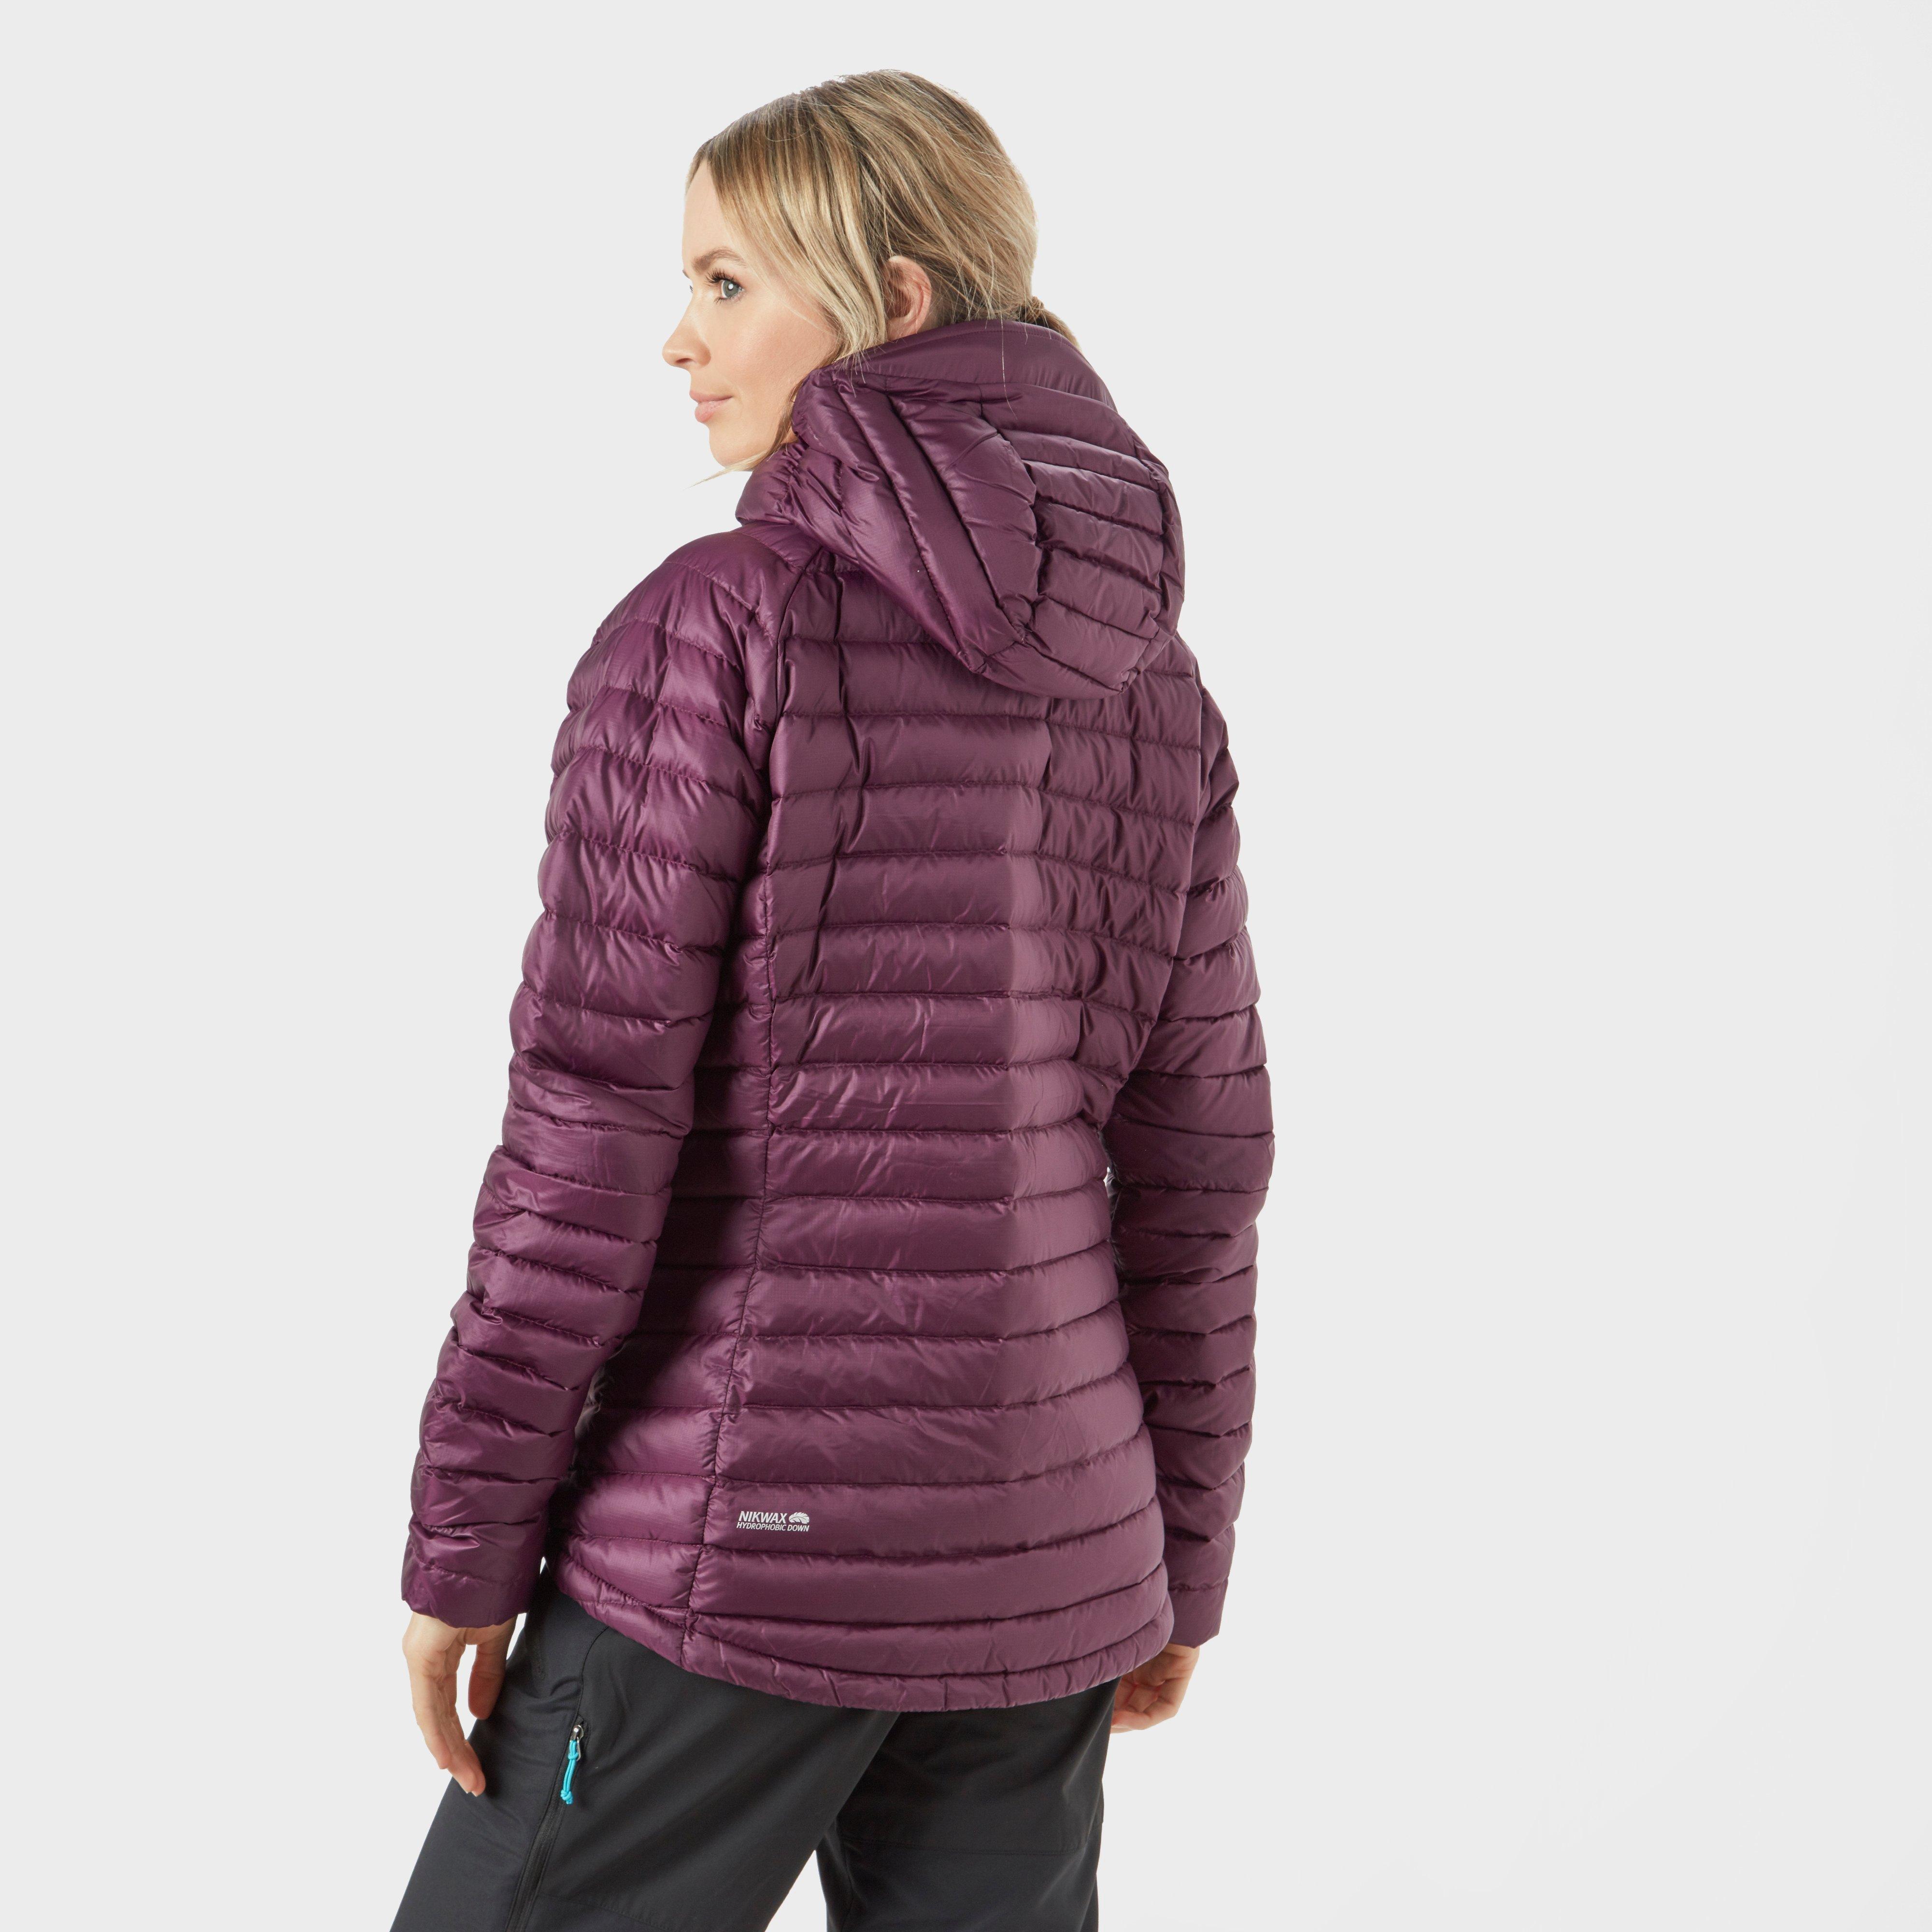 Rab Women's Microlight Alpine Down Jacket Review